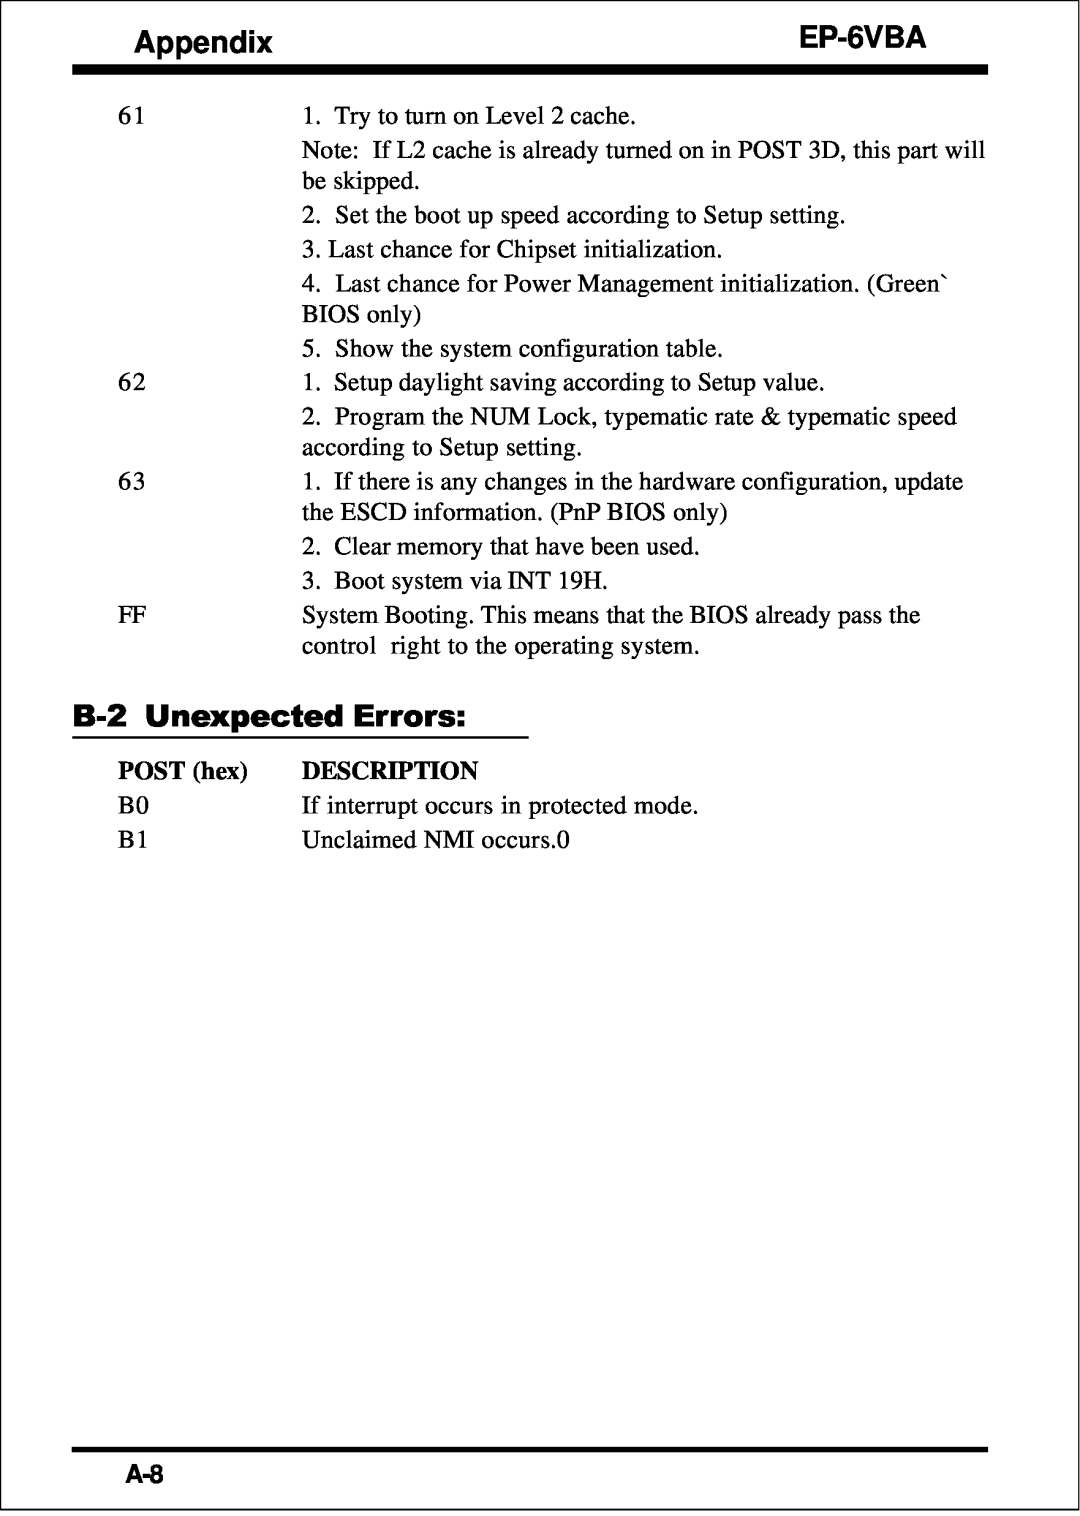 EPoX Computer EP-6VBA specifications Appendix, B-2 Unexpected Errors, POST hex, Description 